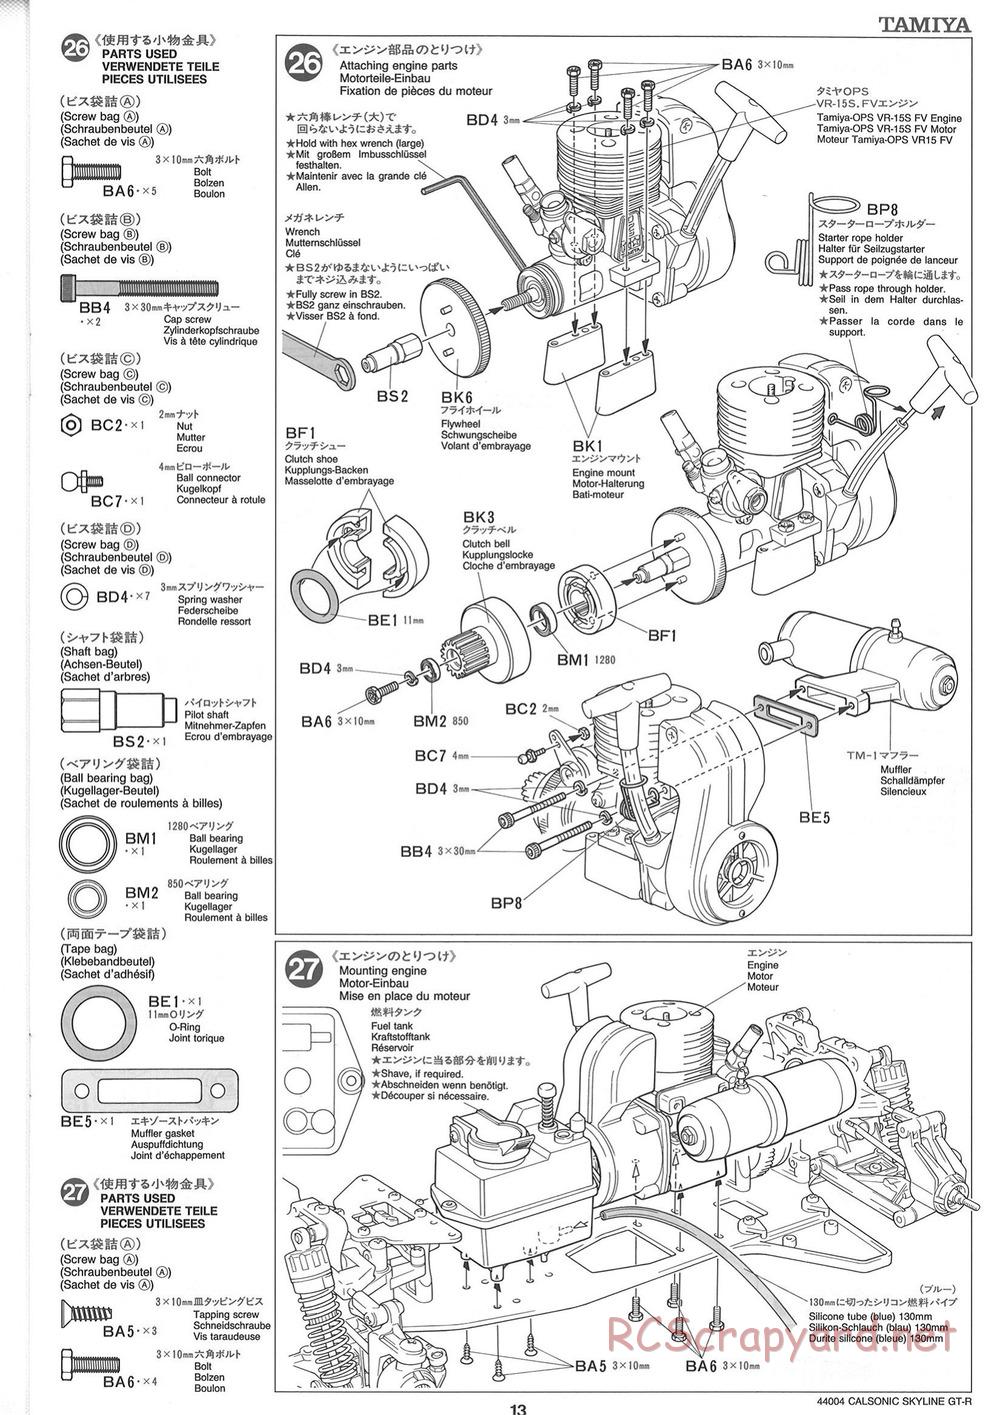 Tamiya - Calsonic GT-R - TGX Mk.1 Chassis - Manual - Page 13